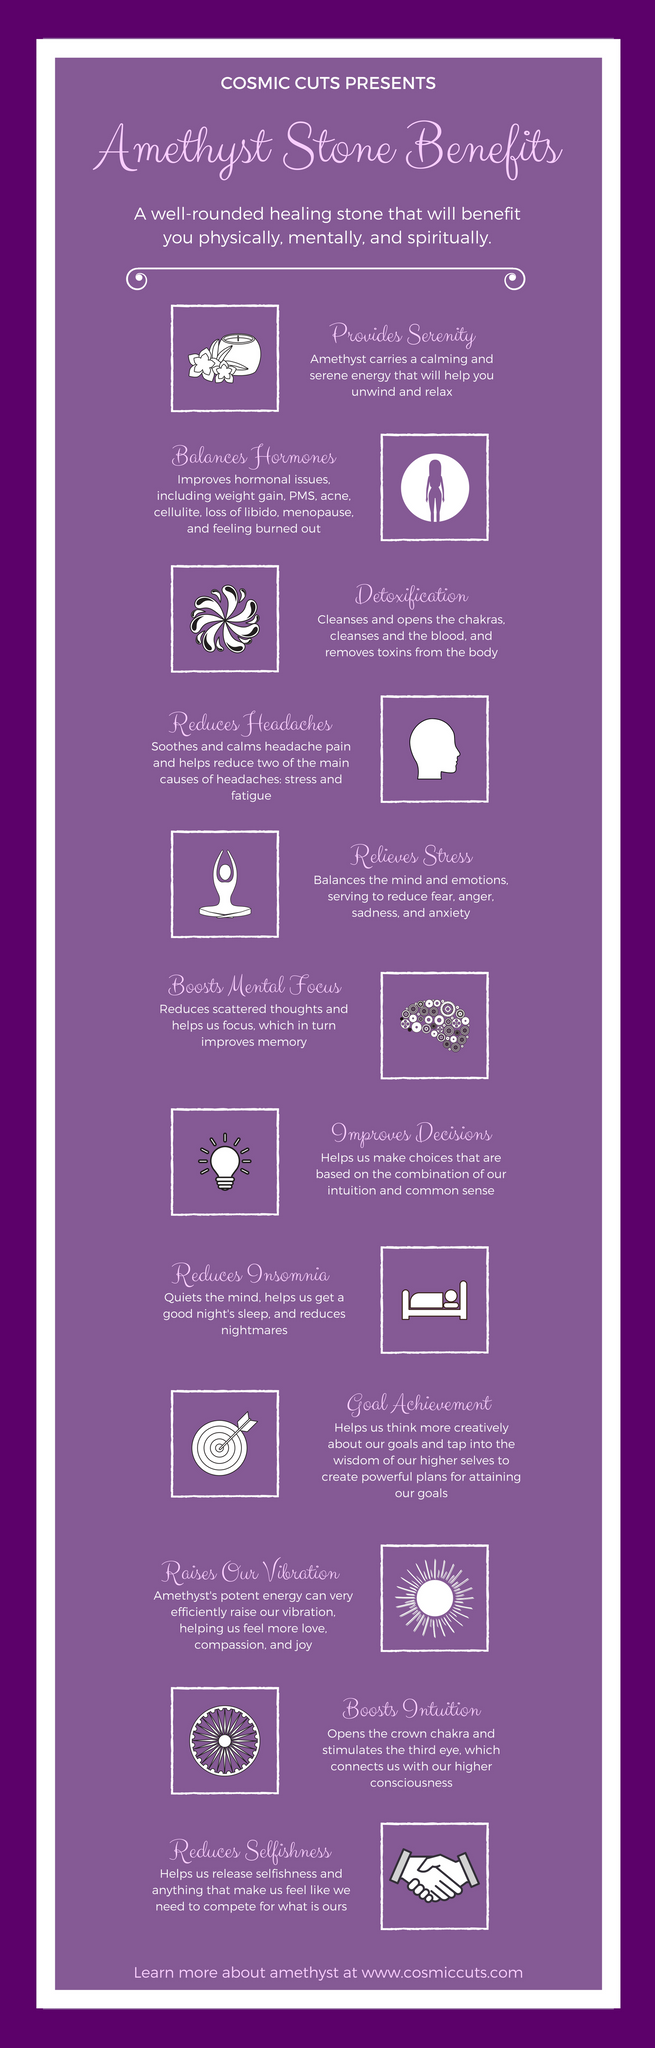 Amethyst Stone Benefits Infographic